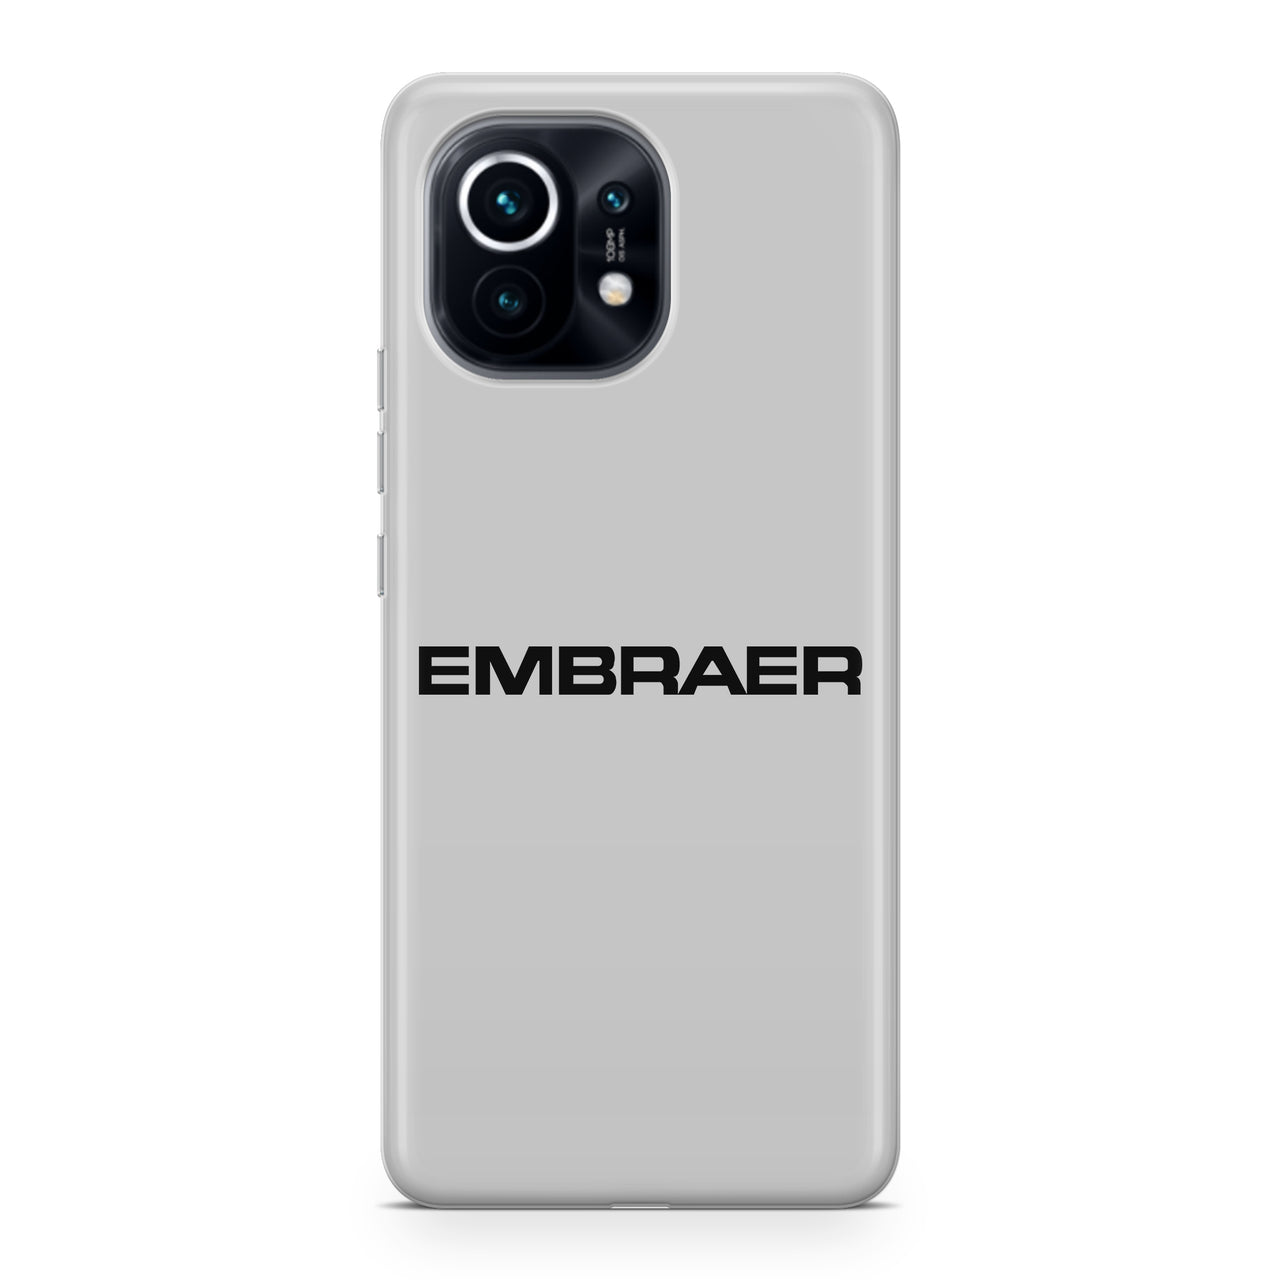 Embraer & Text Designed Xiaomi Cases